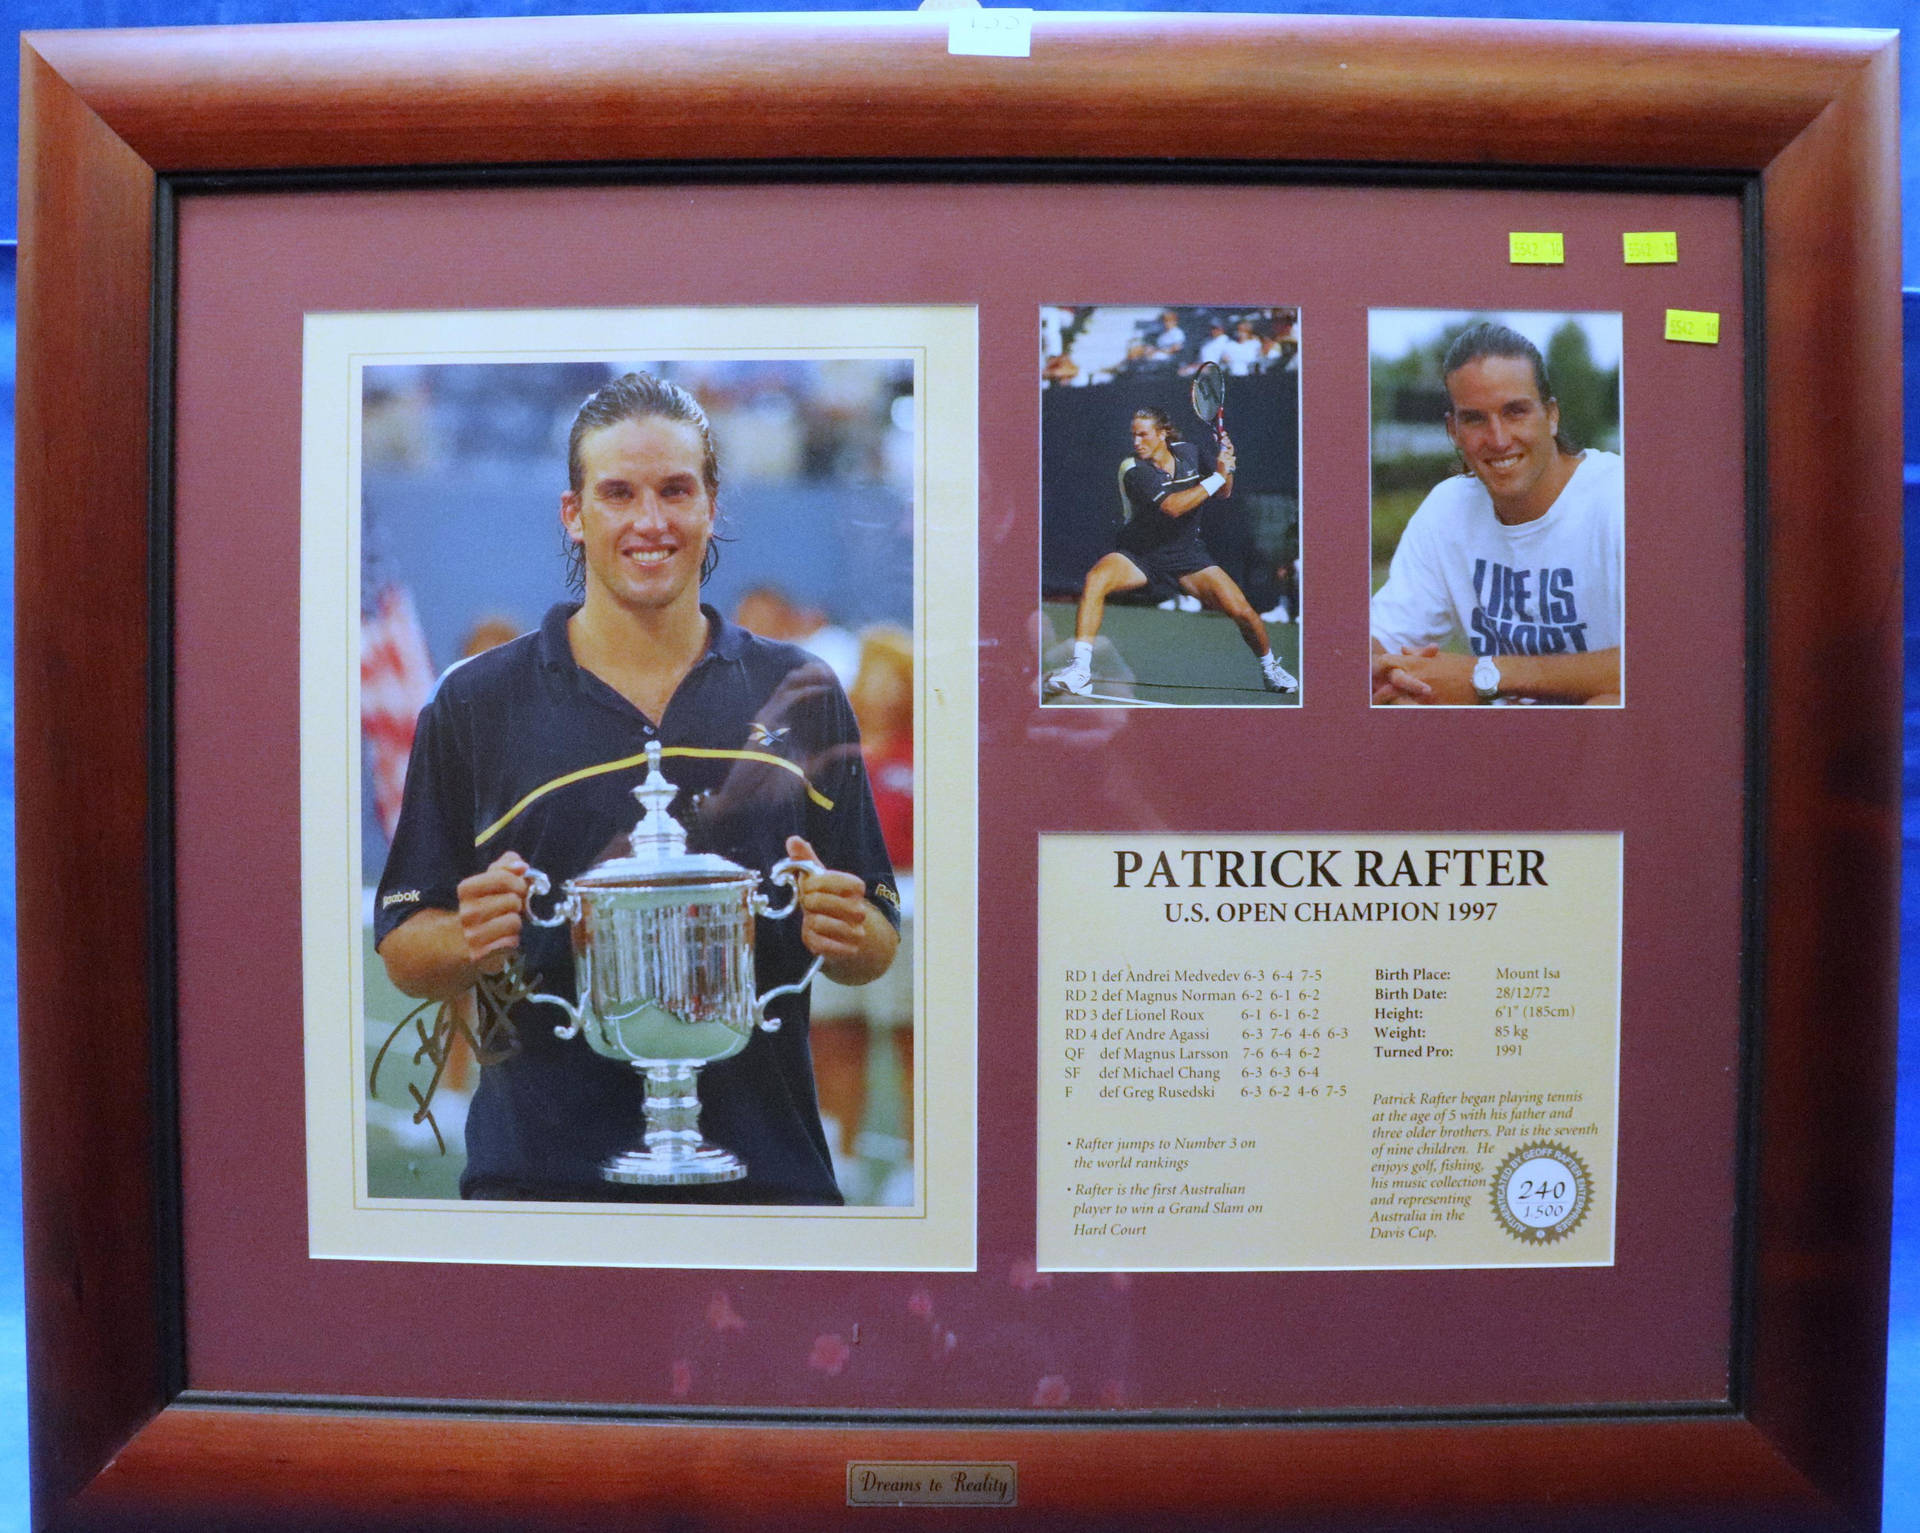 Kan du se Patrick Rafter, US Open Champion, indrammet? Wallpaper